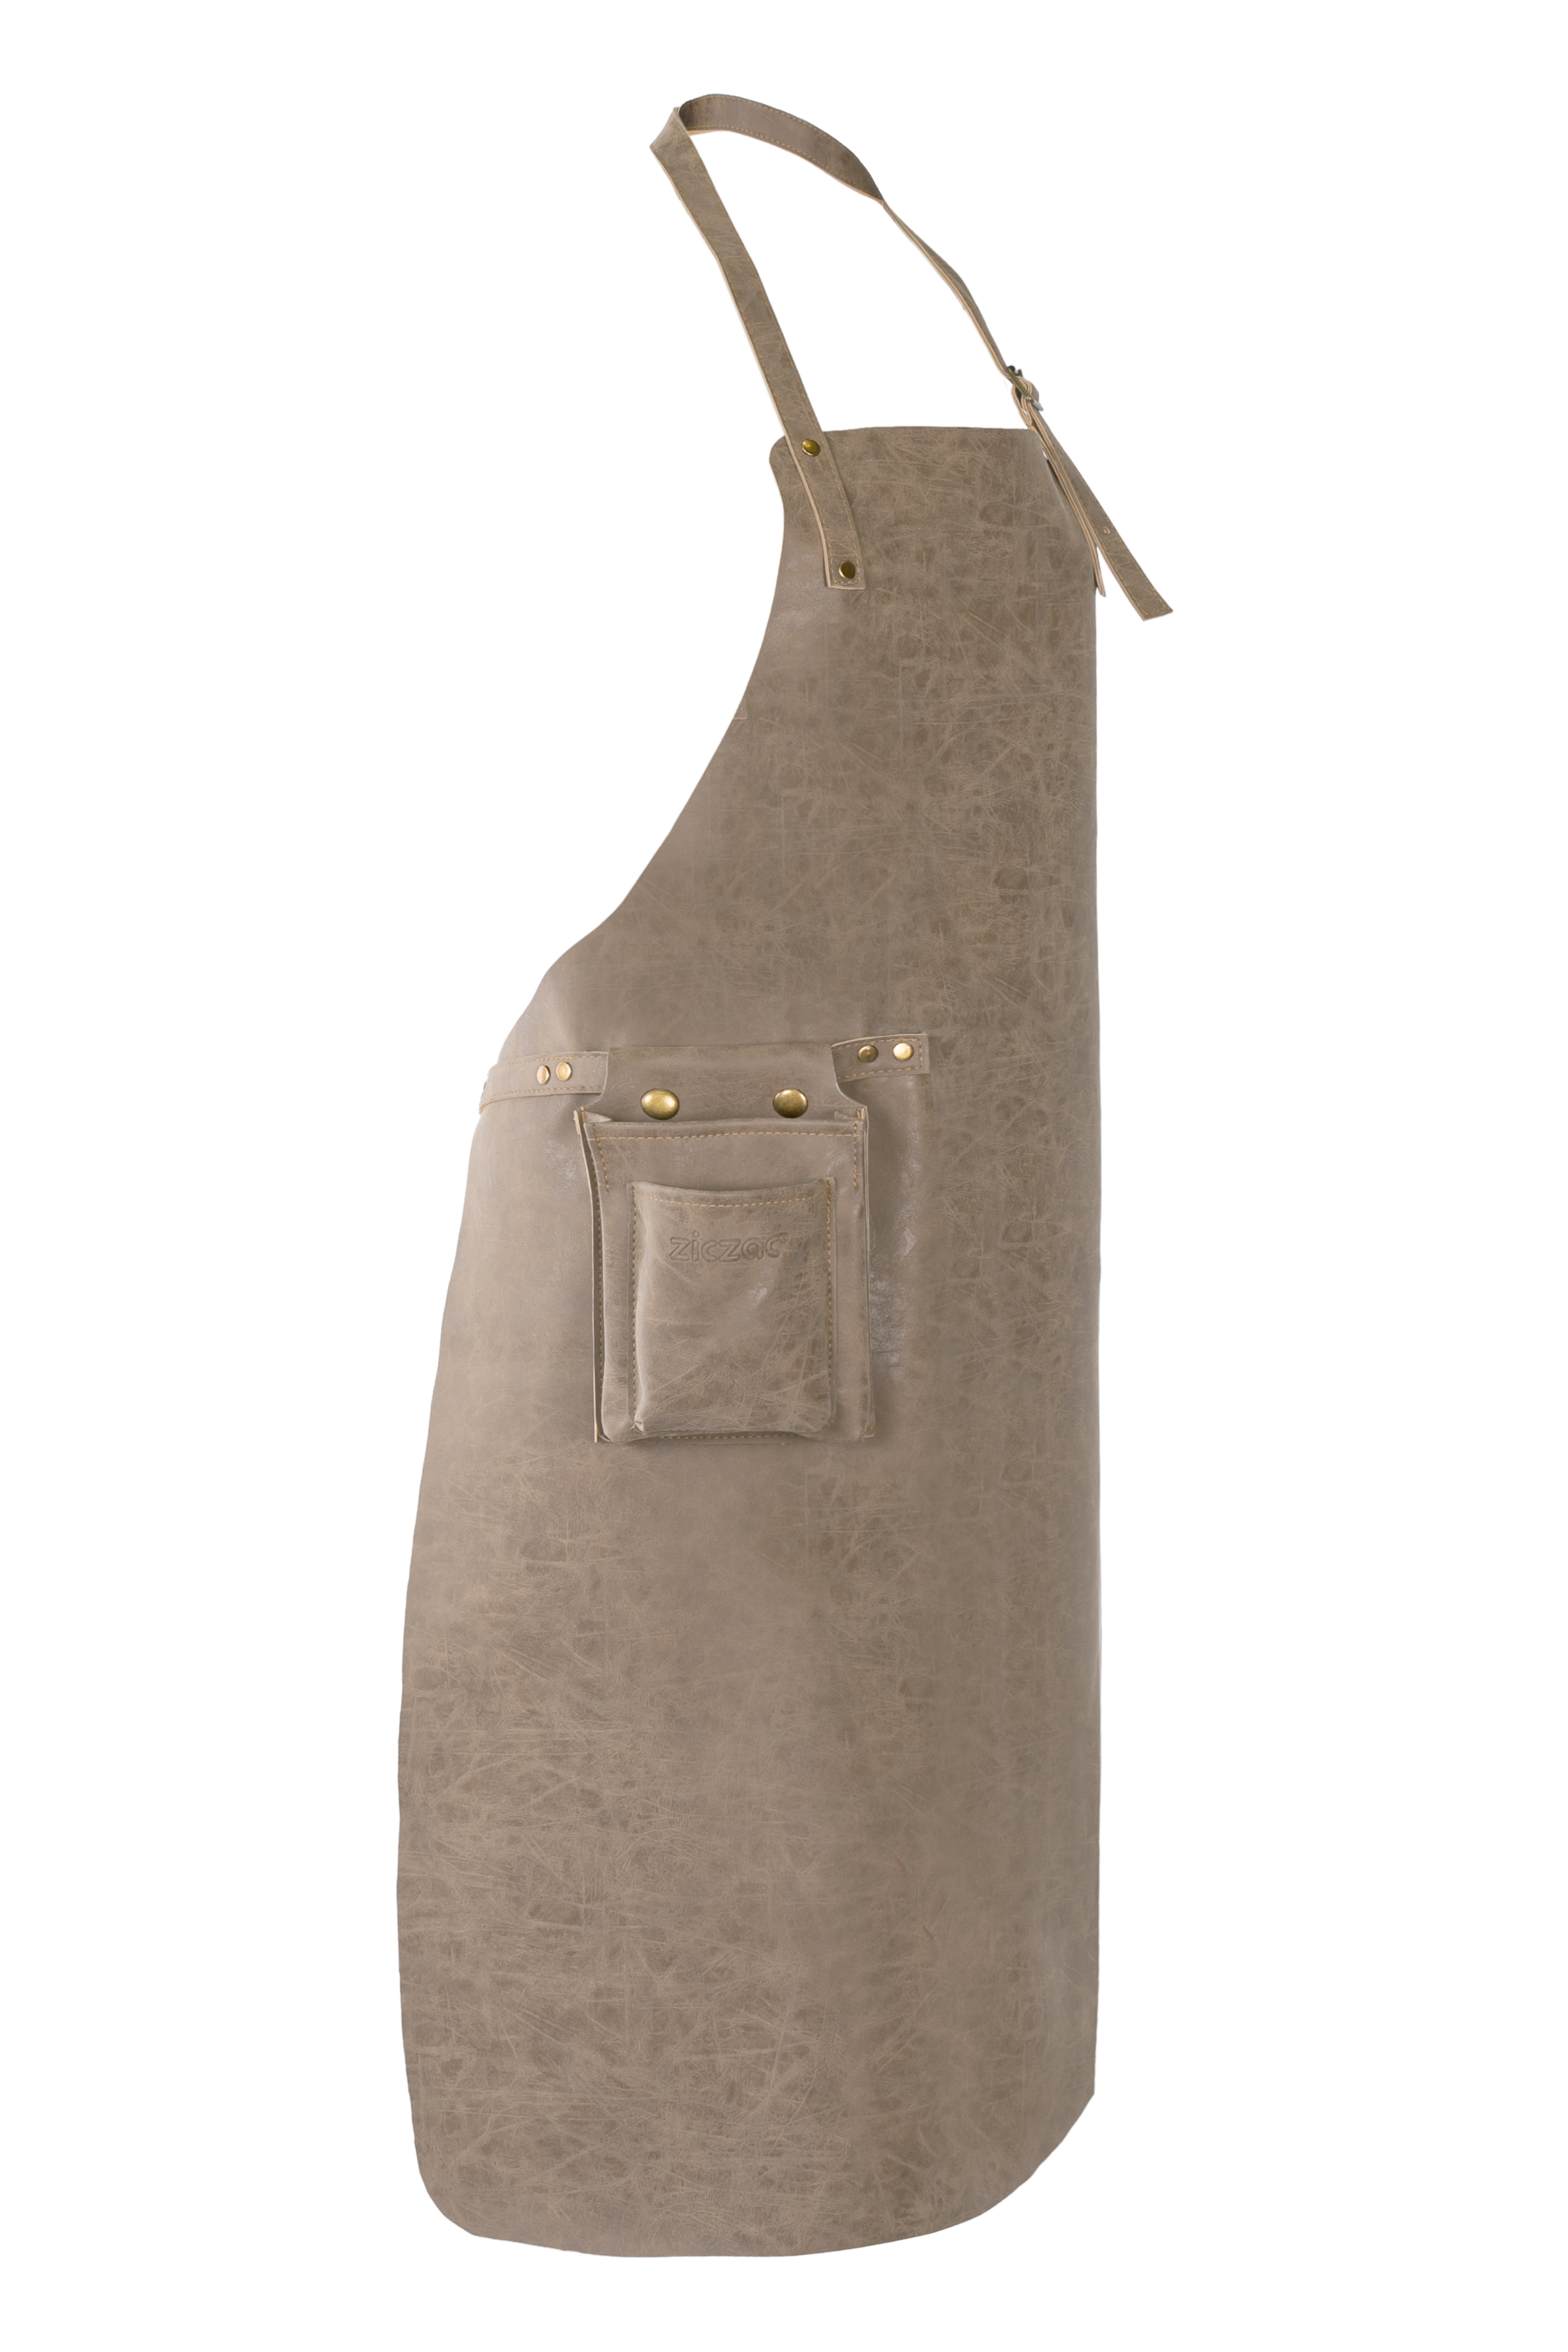 Tablier TRUMAN (Towel loop - no pocket - opt. Accessory bag), 70x90 cm, taupe